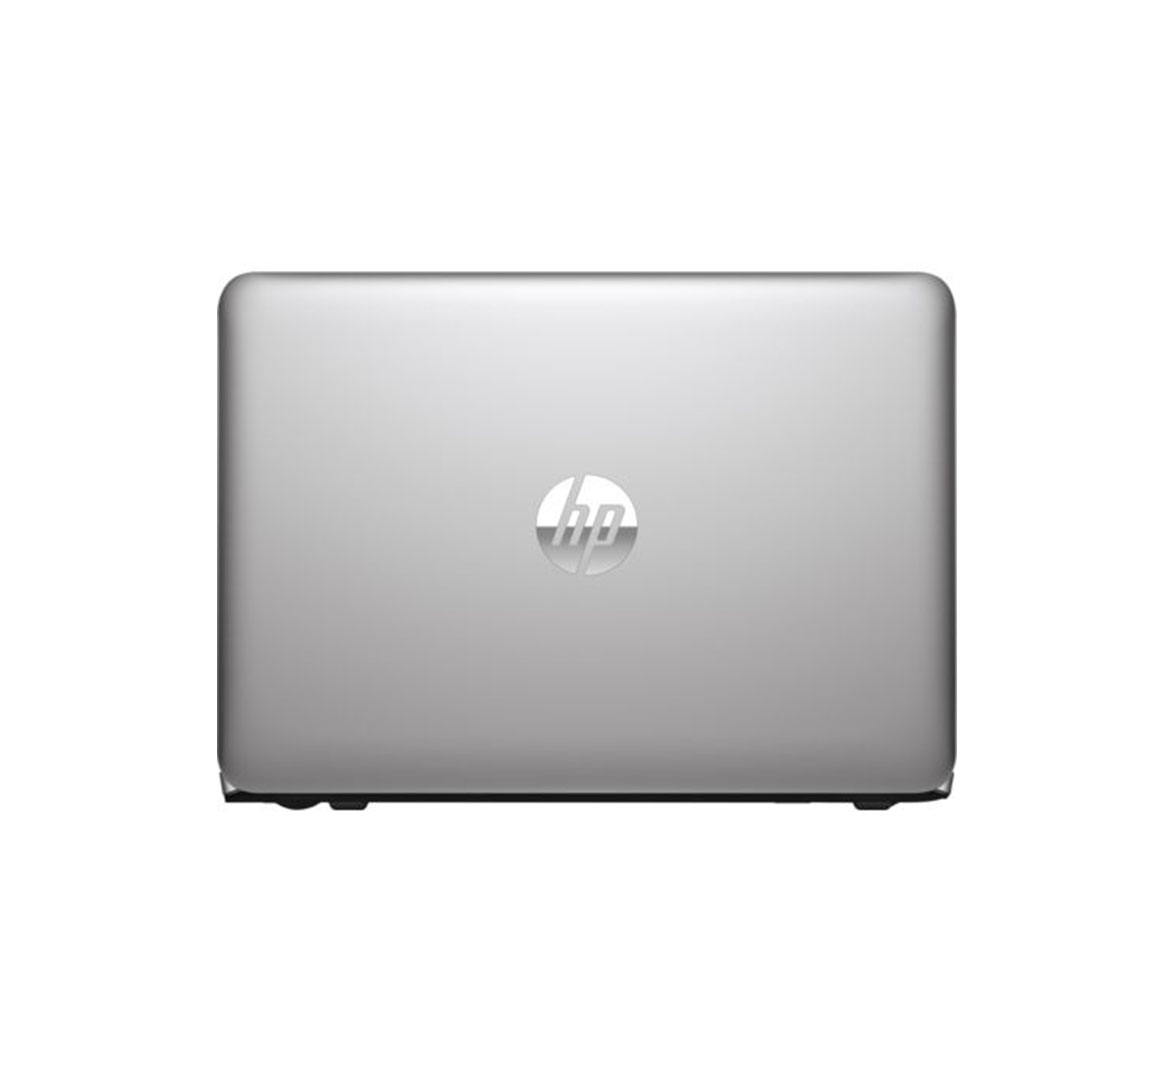 HP Elitebook 820 G4 Business Laptop, Intel Core i5-7th Gen CPU, 8GB RAM ...